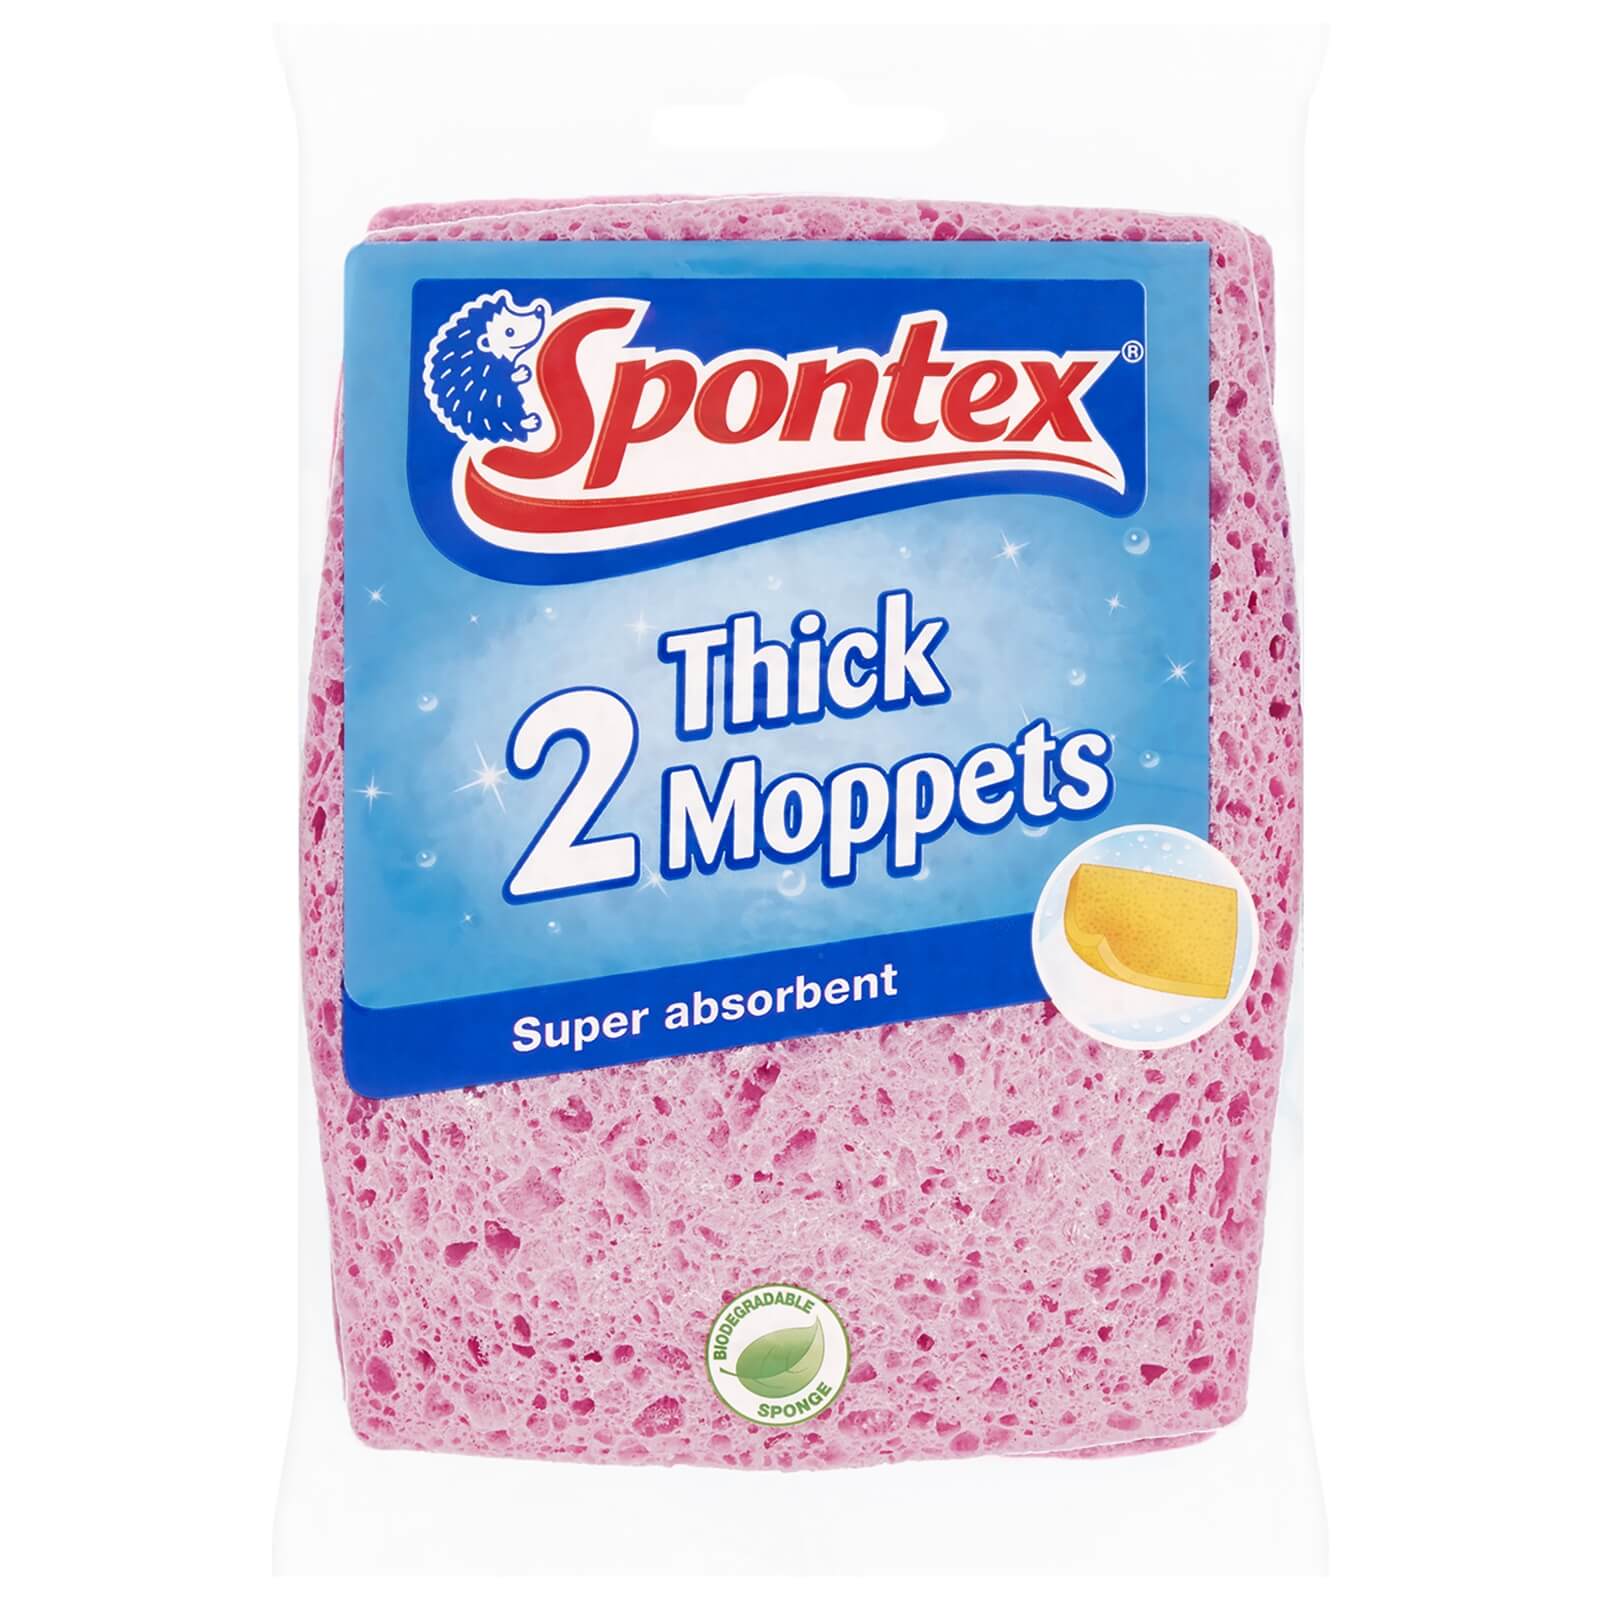 Photo of Spontex Thick Moppets 2pk